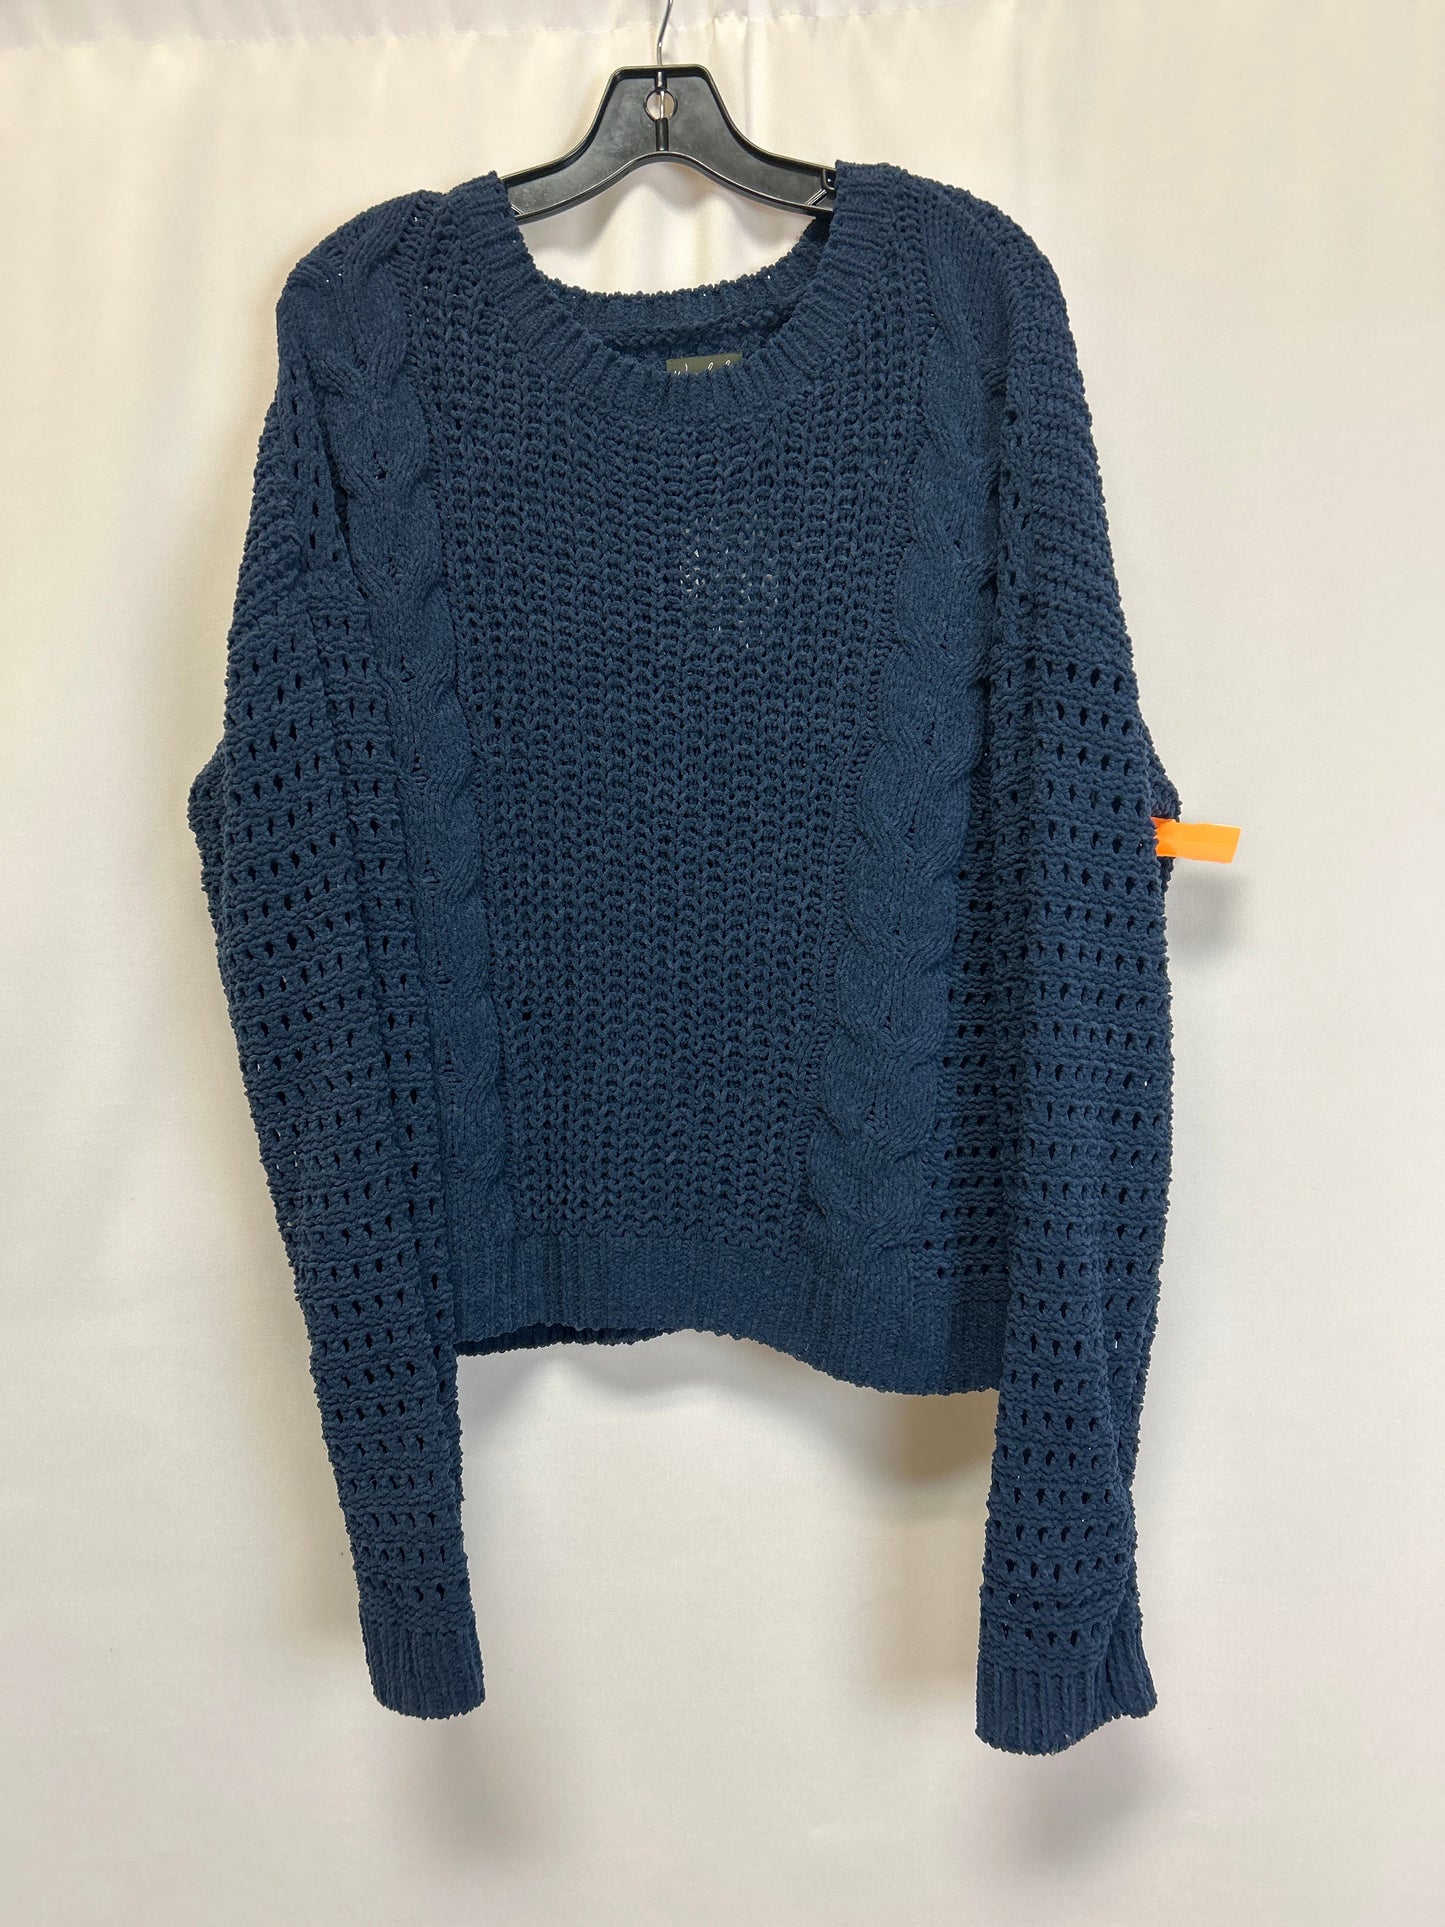 Sweater By Wondery  Size: Xl